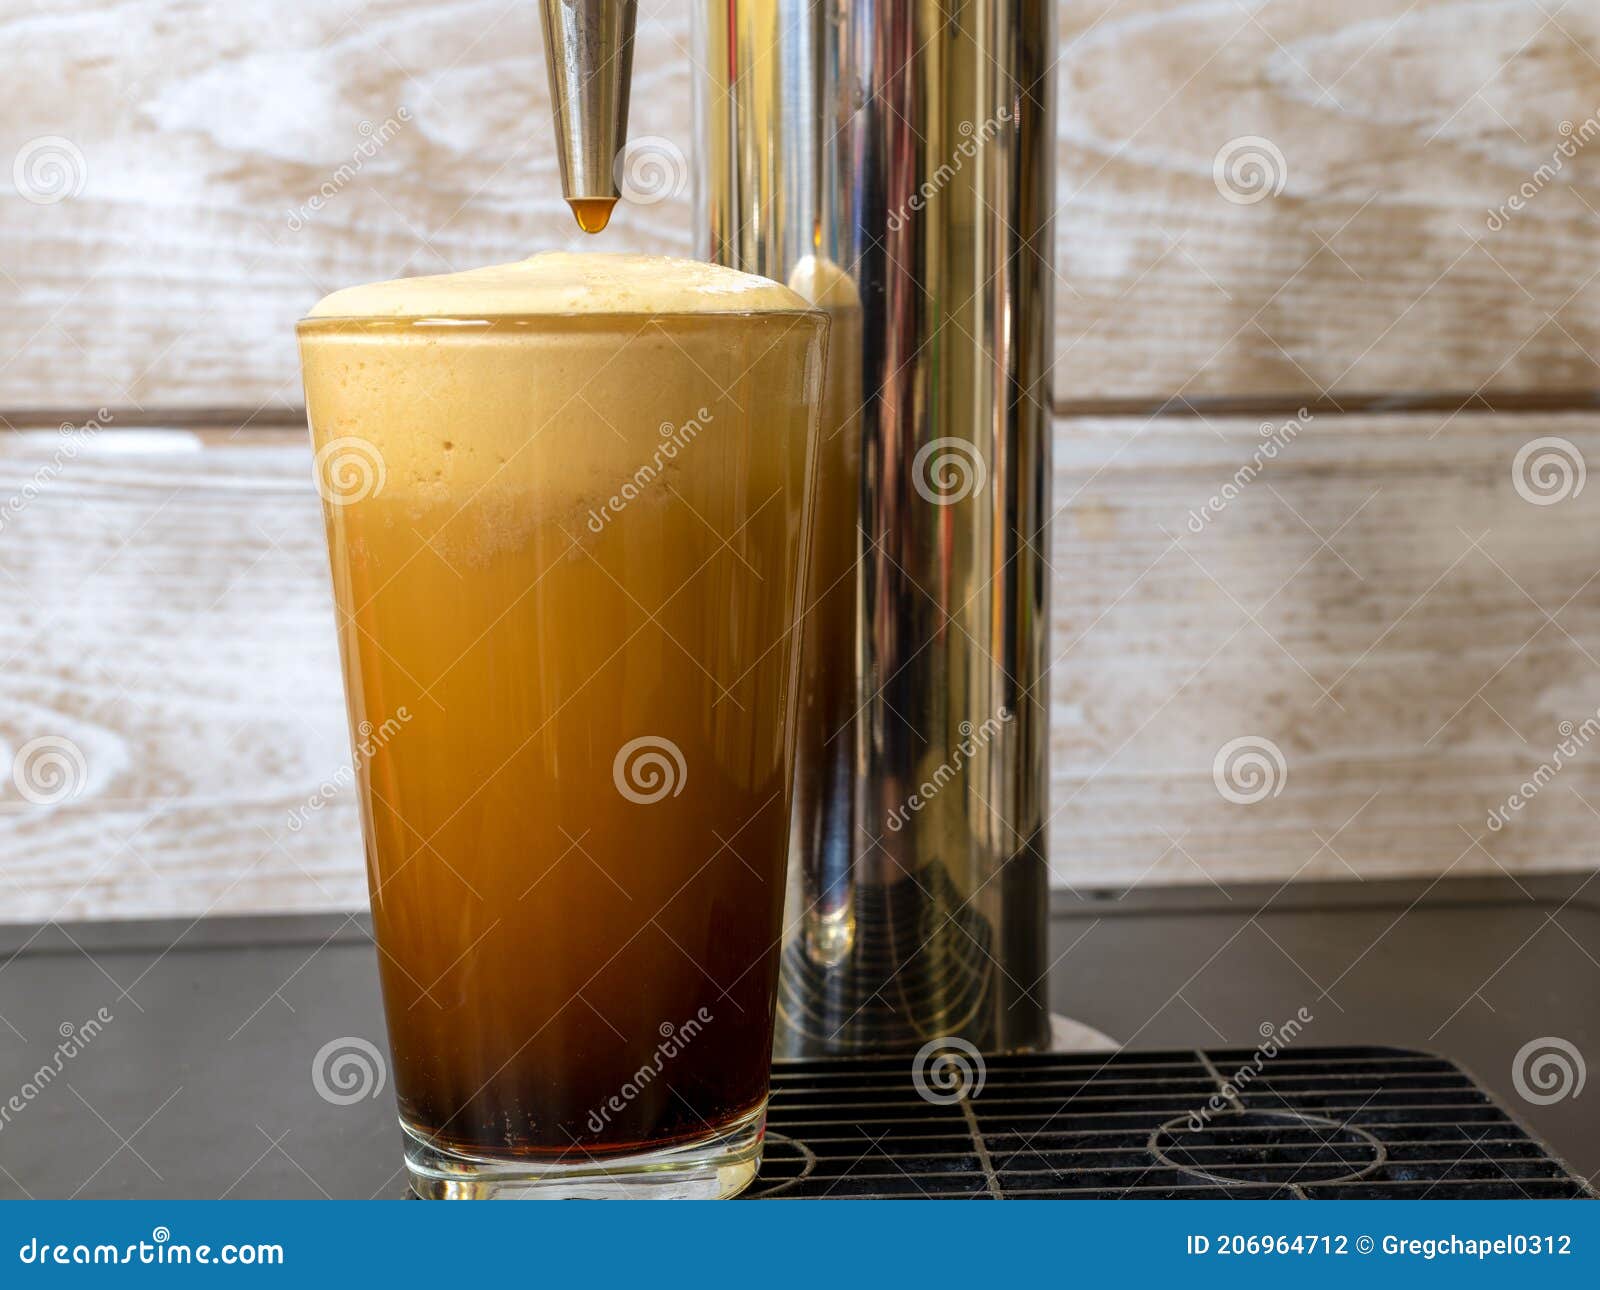 nitro cold brew coffee in a clear glass